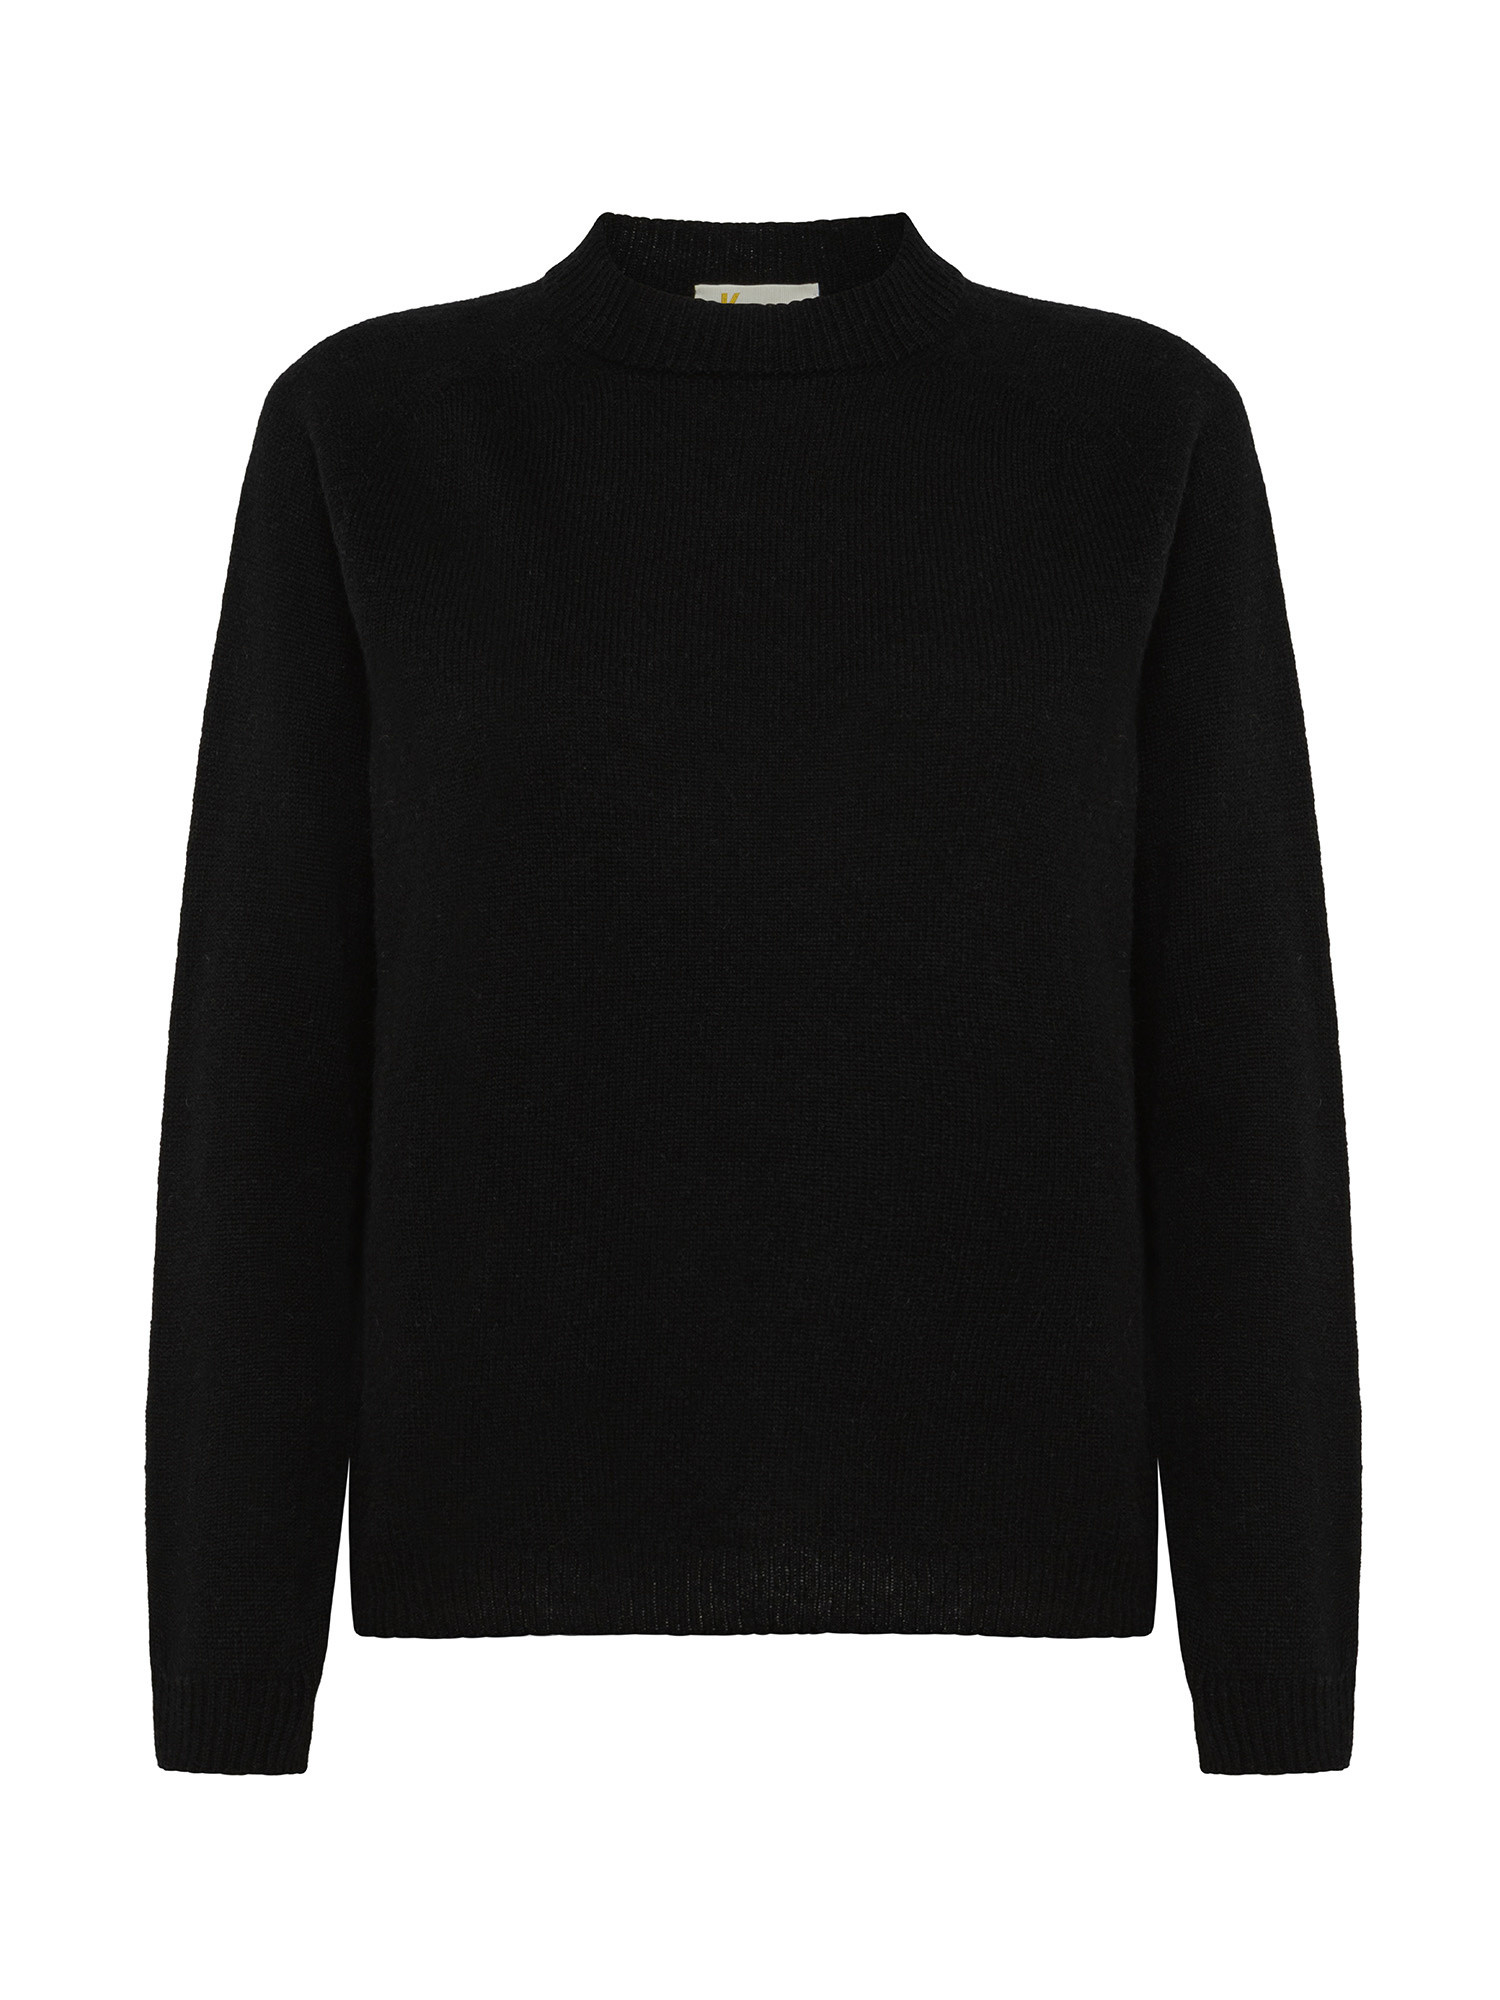 K Collection - Crewneck sweater, Black, large image number 0